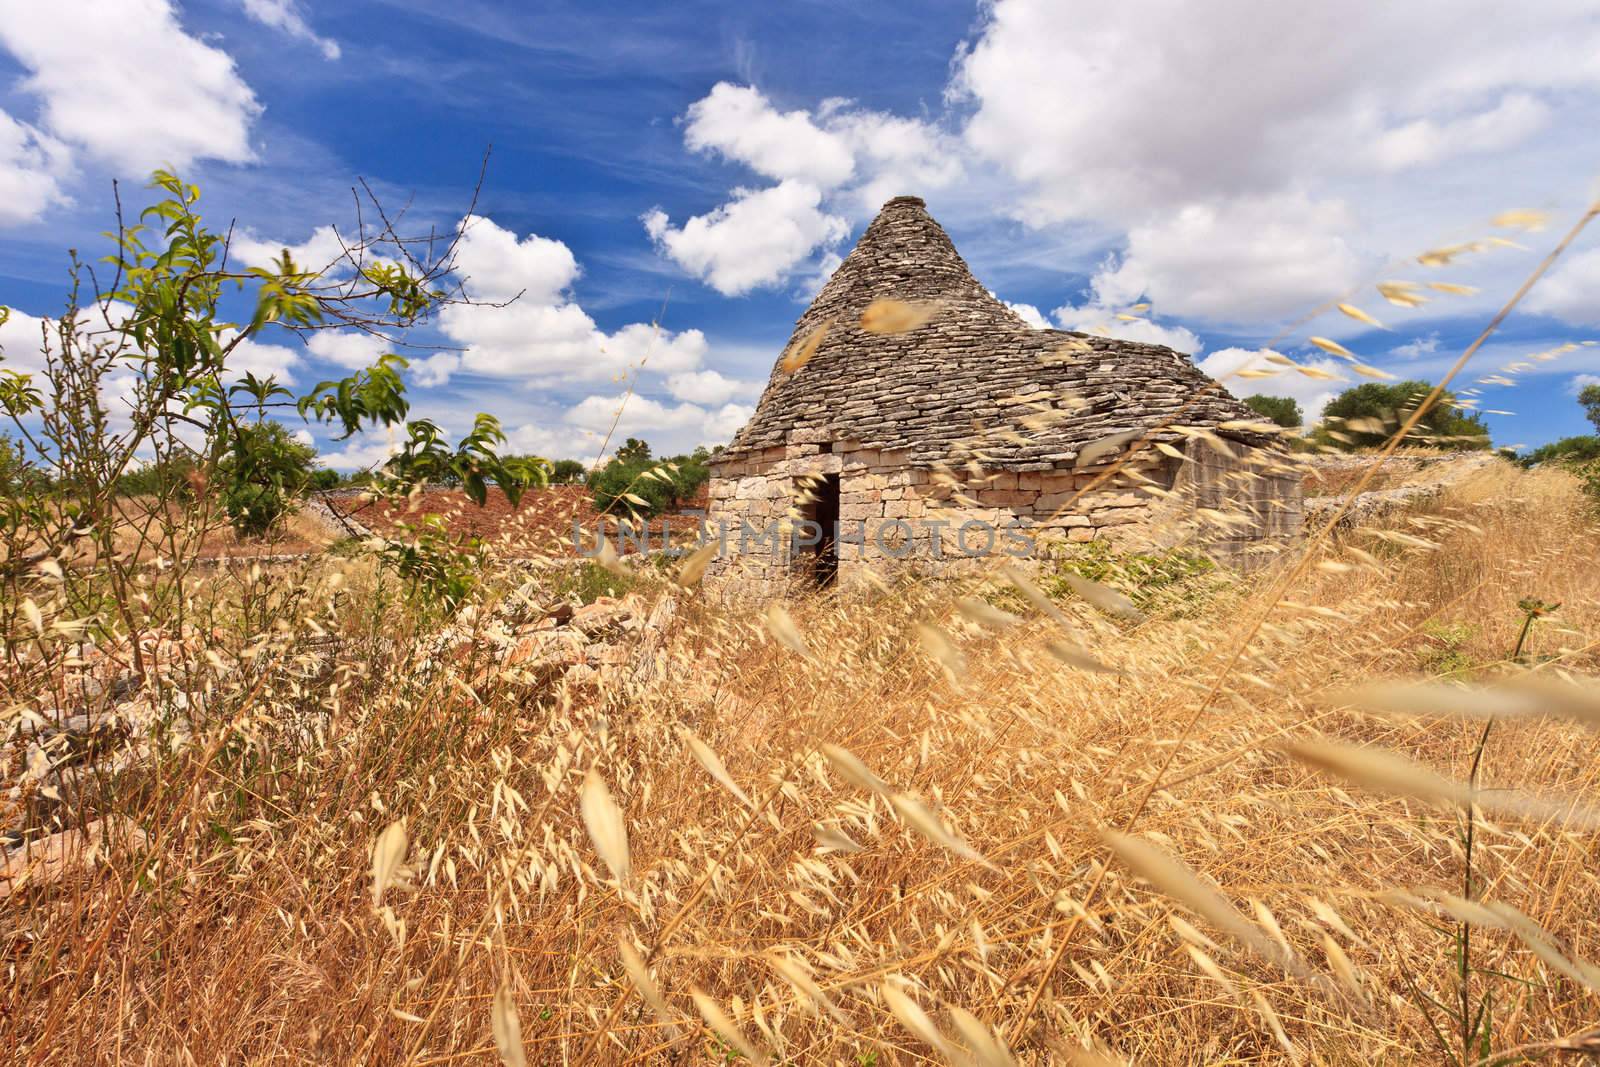 Trulli cone building hidden in long grass in Puglia Italy